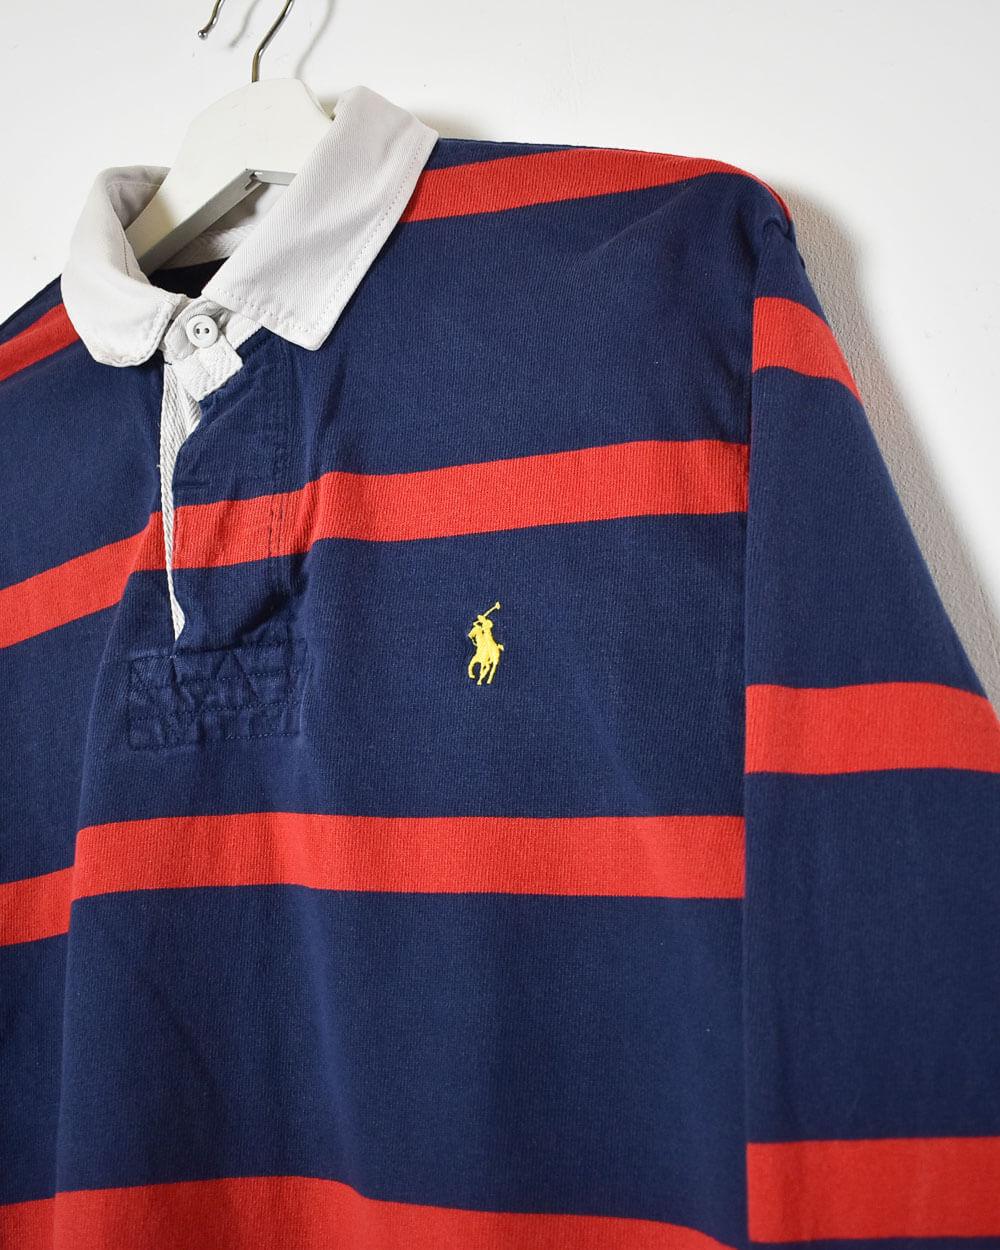 Navy Ralph Lauren Rugby Shirt - Large